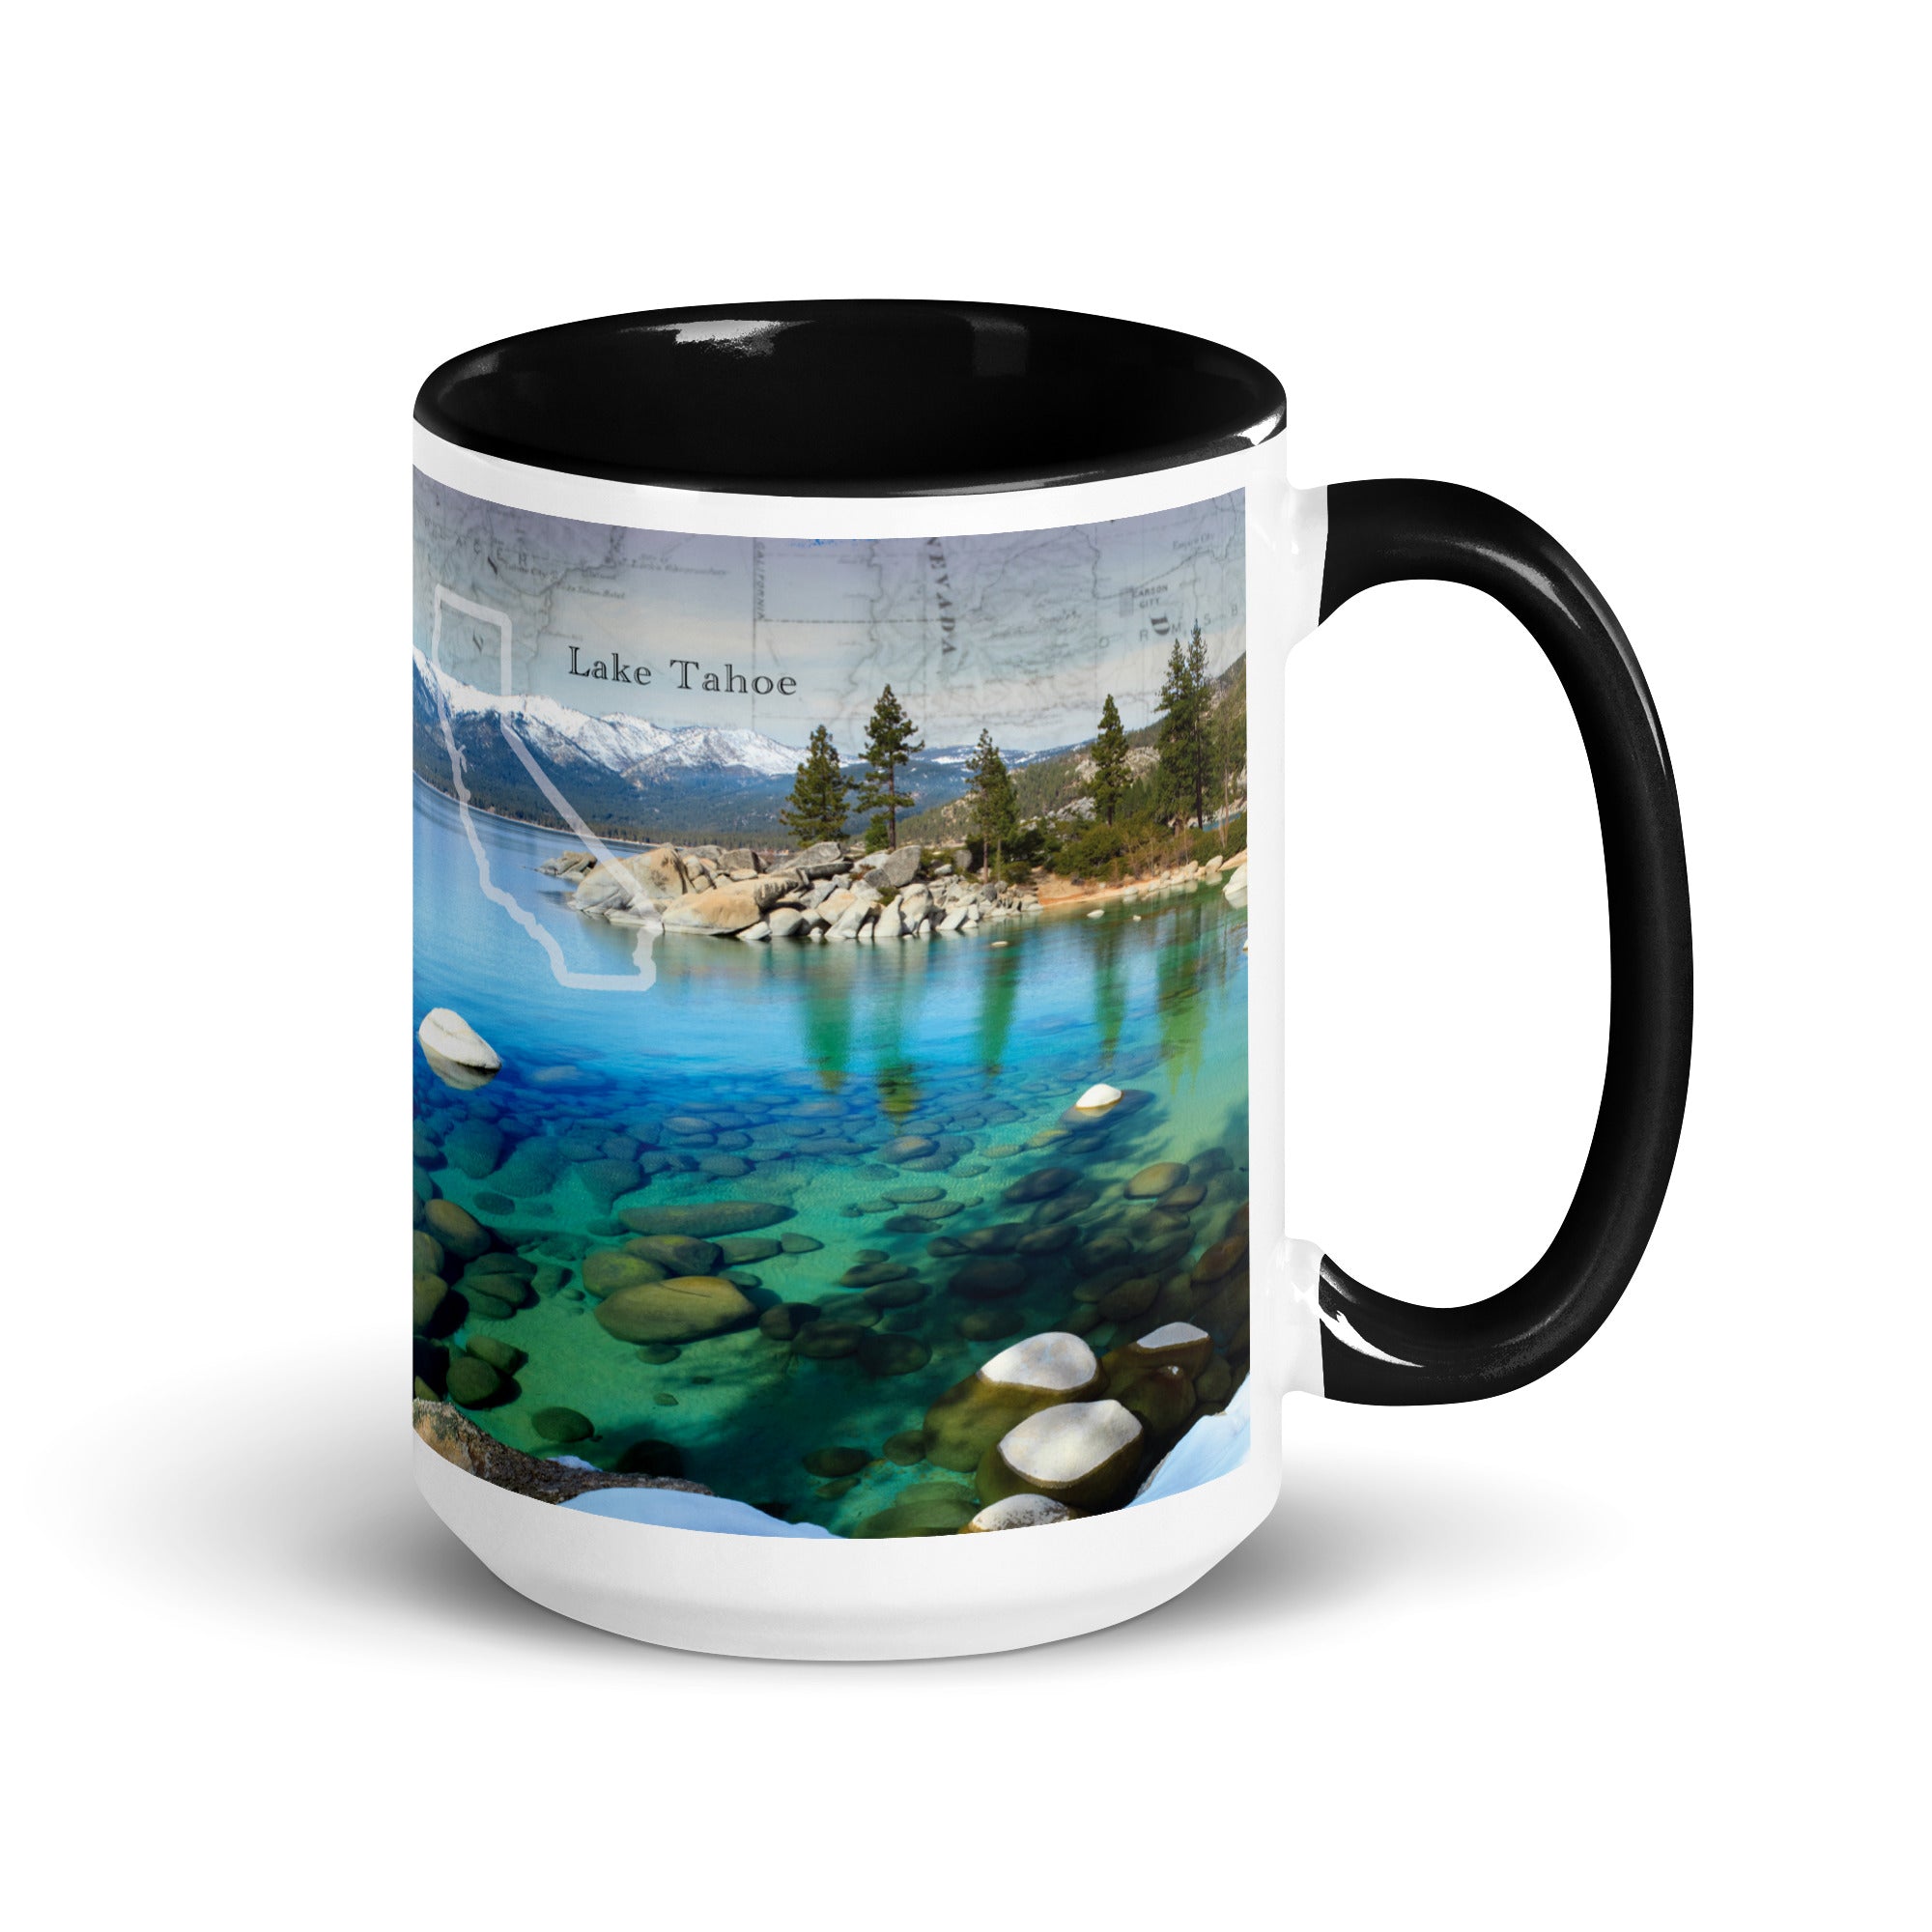 Lake Tahoe Summer Trails Mug with Black Inside